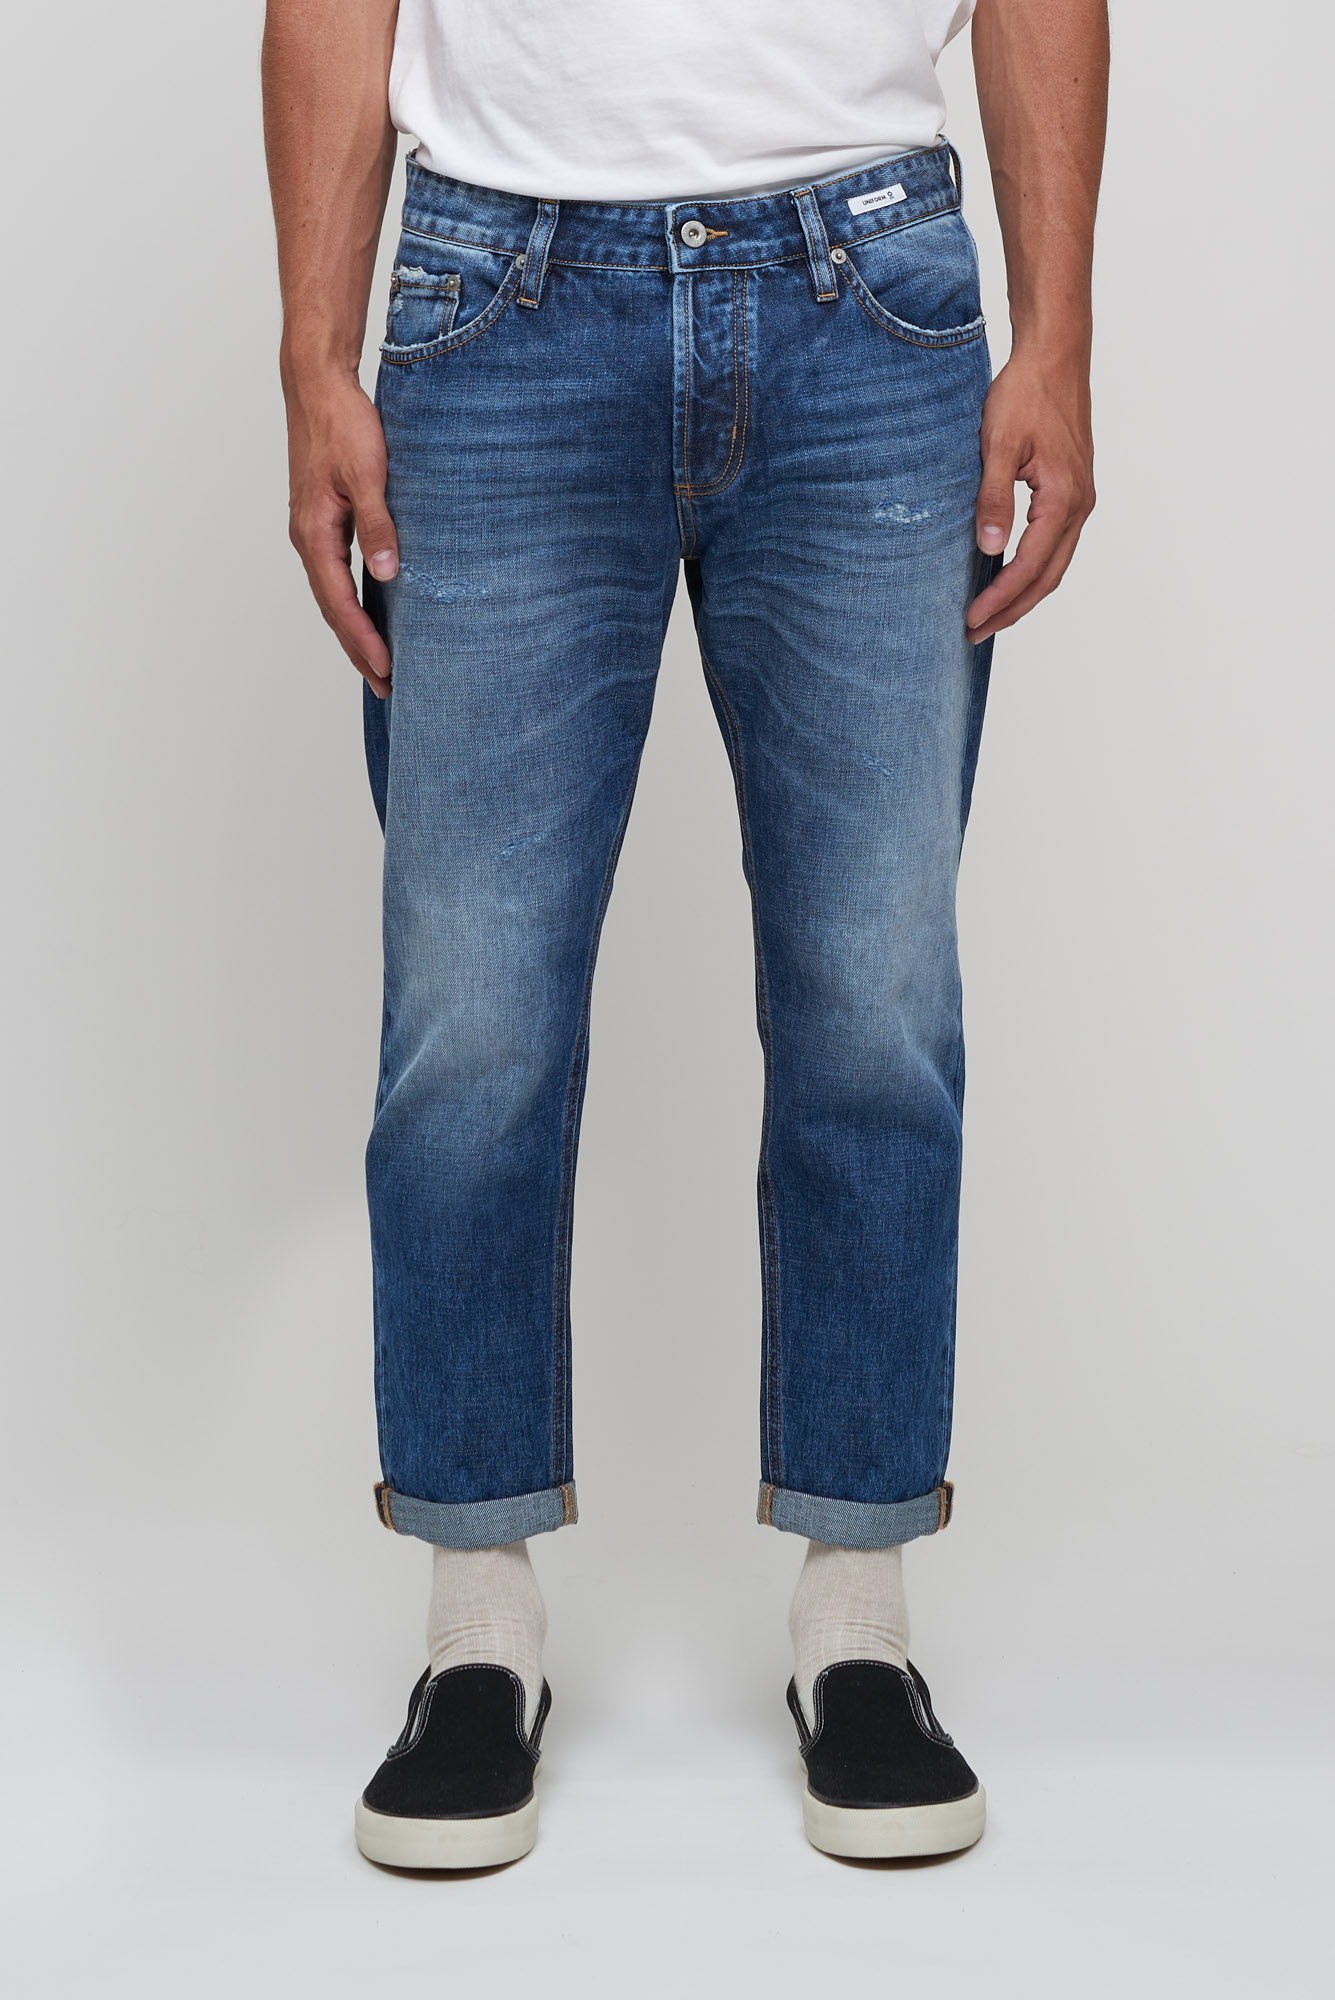 DANNY REGULAR SLIM CROPPED S2 - Uniform Jeans Official